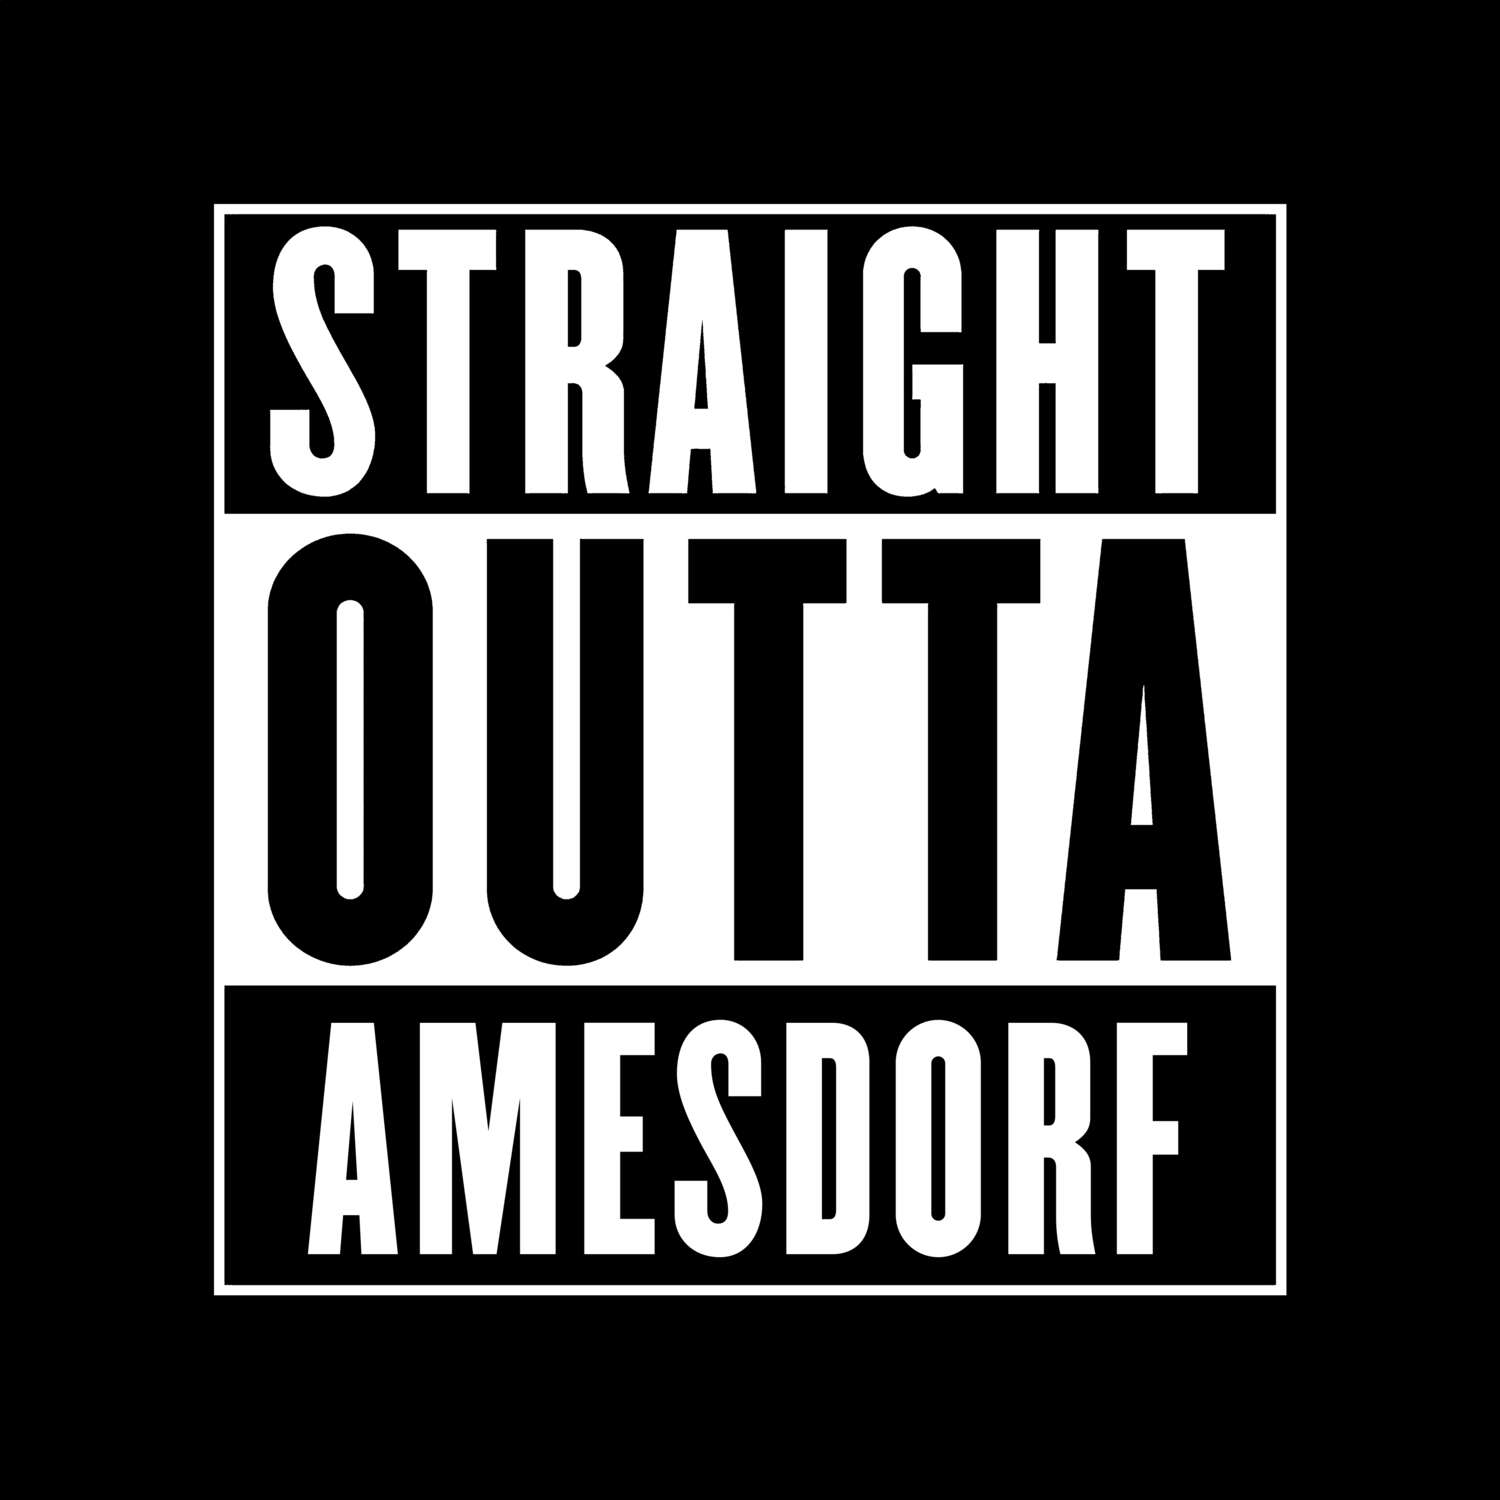 Amesdorf T-Shirt »Straight Outta«